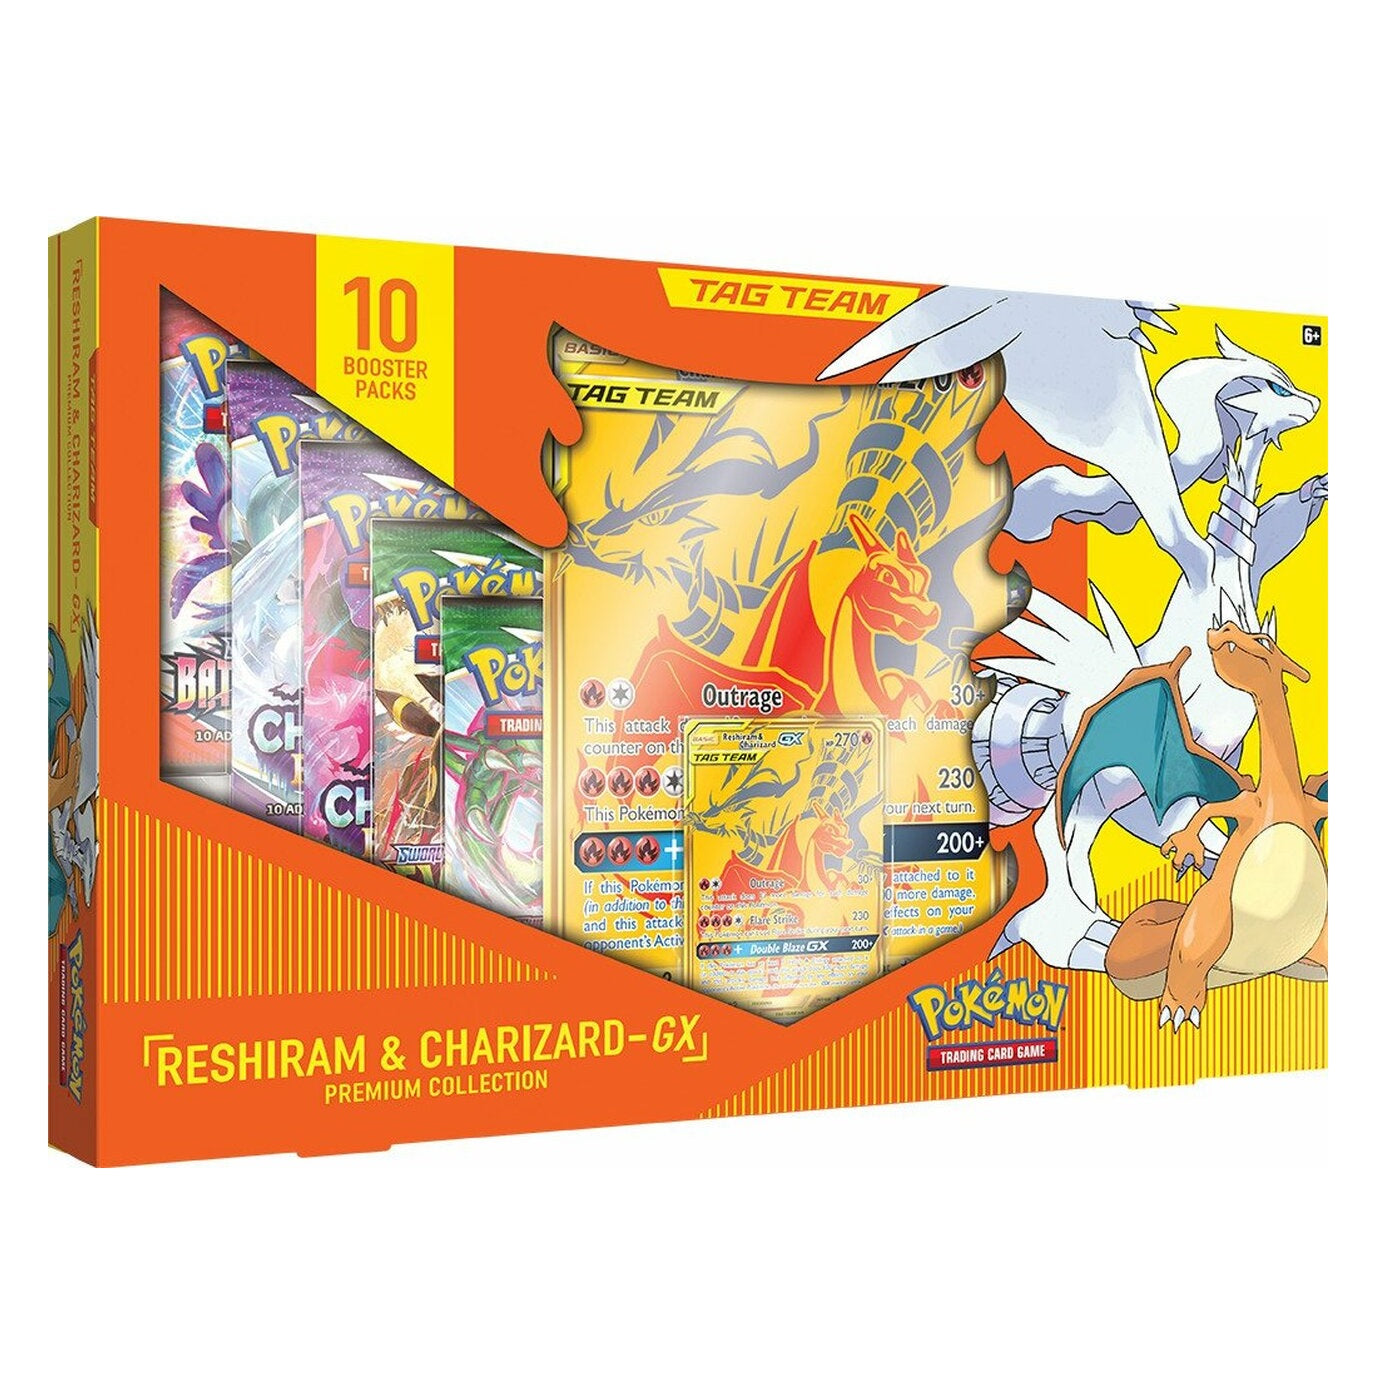 Pokémon Company International - Pokémon TCG Box Set - Reshiram & Charizard-GX Tag Team Premium Collection